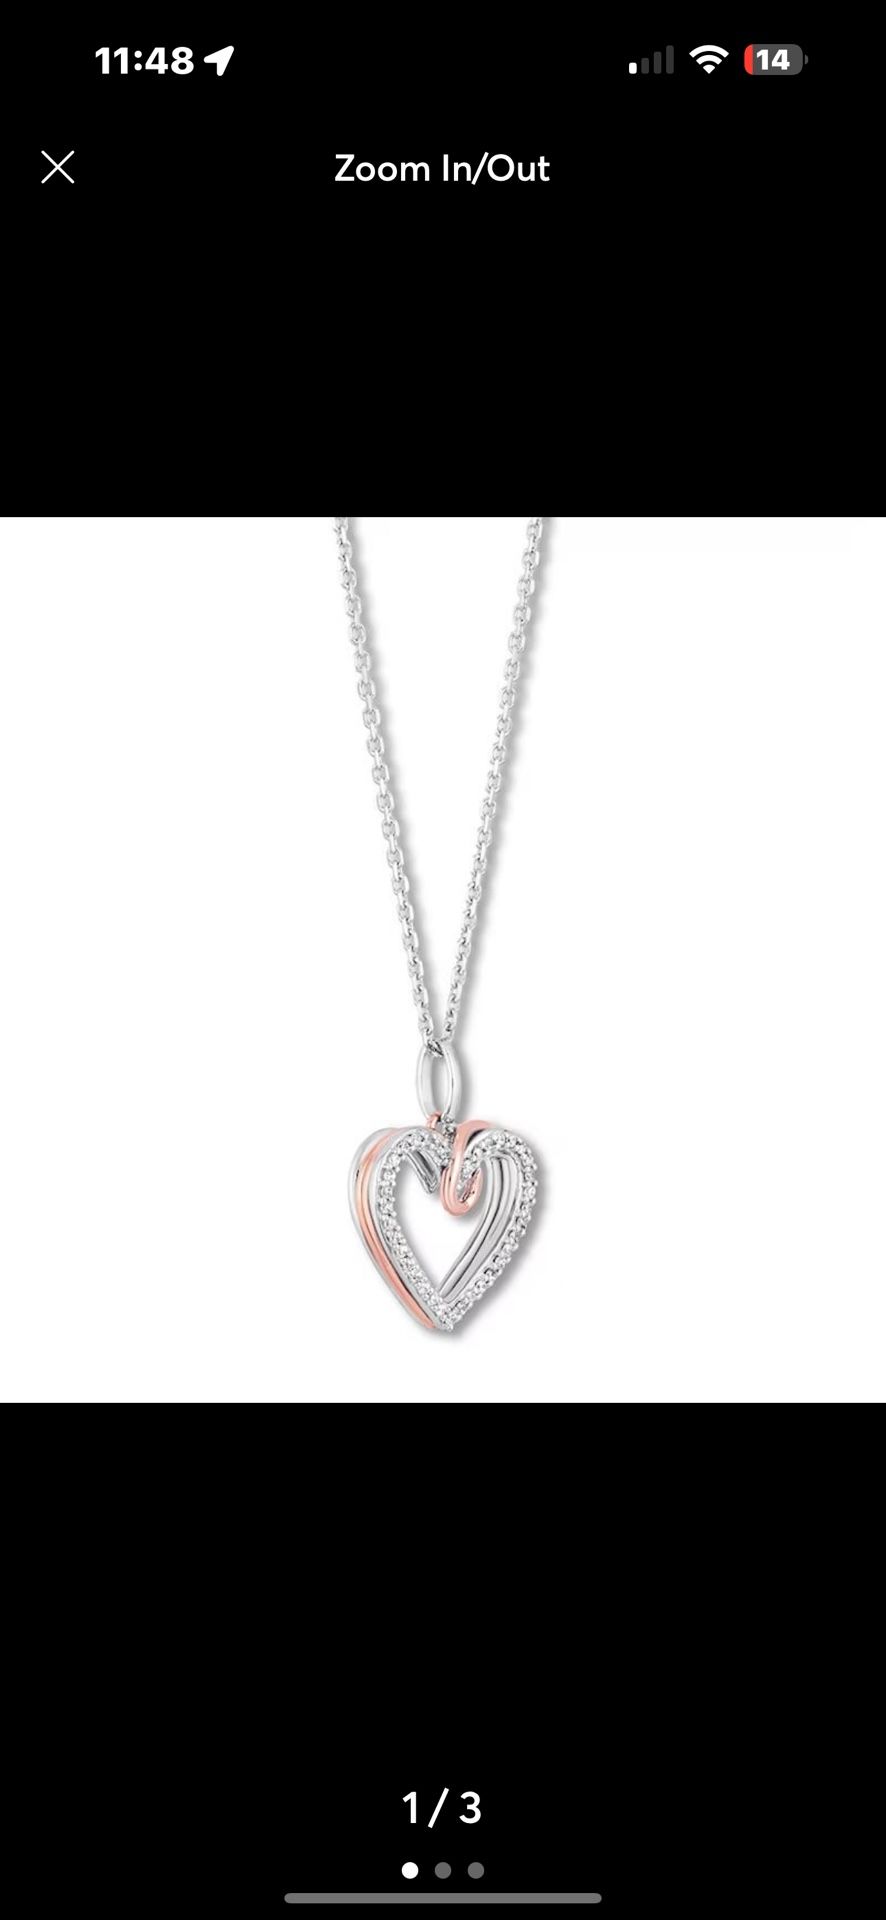 Hallmark Diamonds Heart Necklace 1/10 ct tw Sterling Silver & 10K Rose Gold 18"